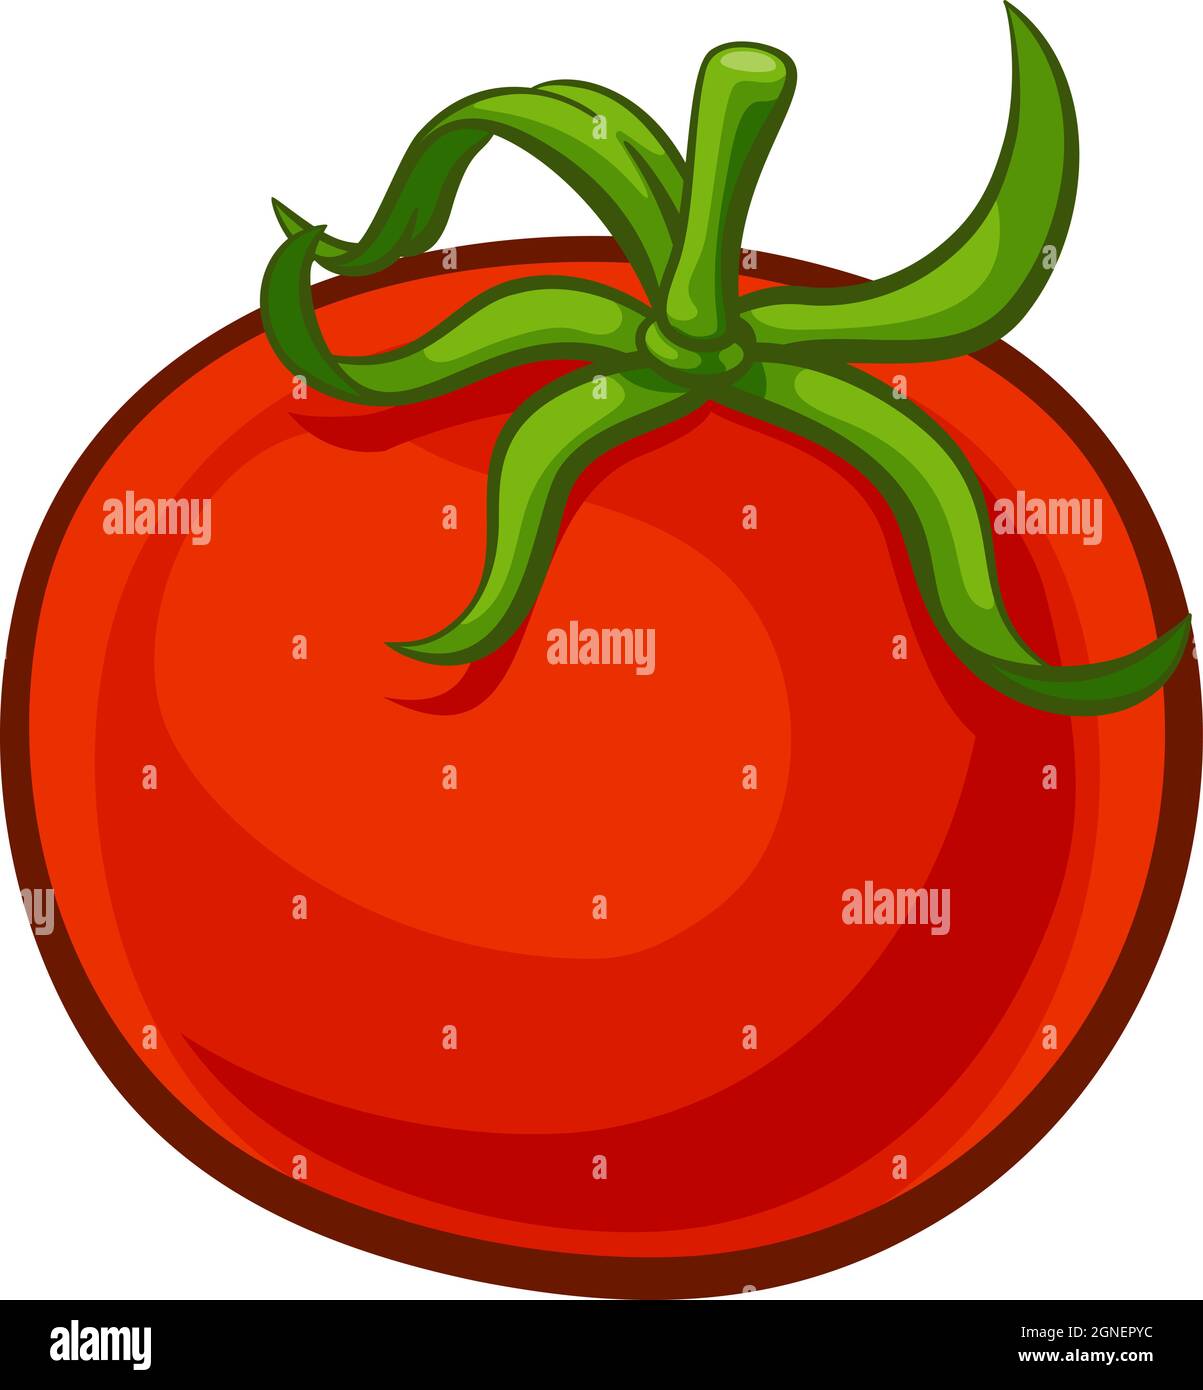 Tomato Vegetable Cartoon Food Drawing Stock Vector Image & Art - Alamy